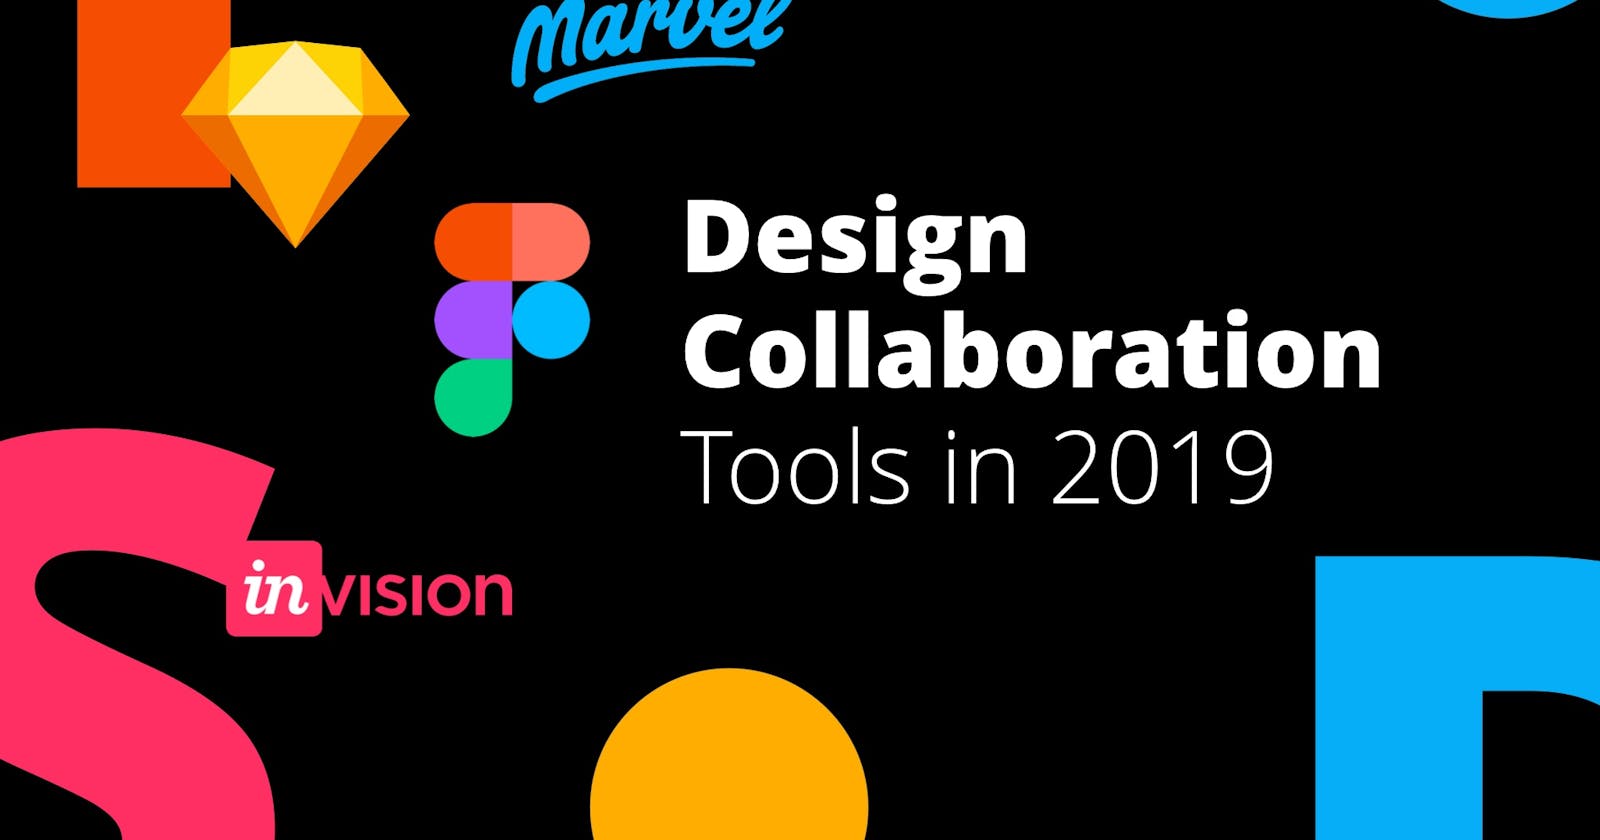 Design Collaboration Tools in 2019